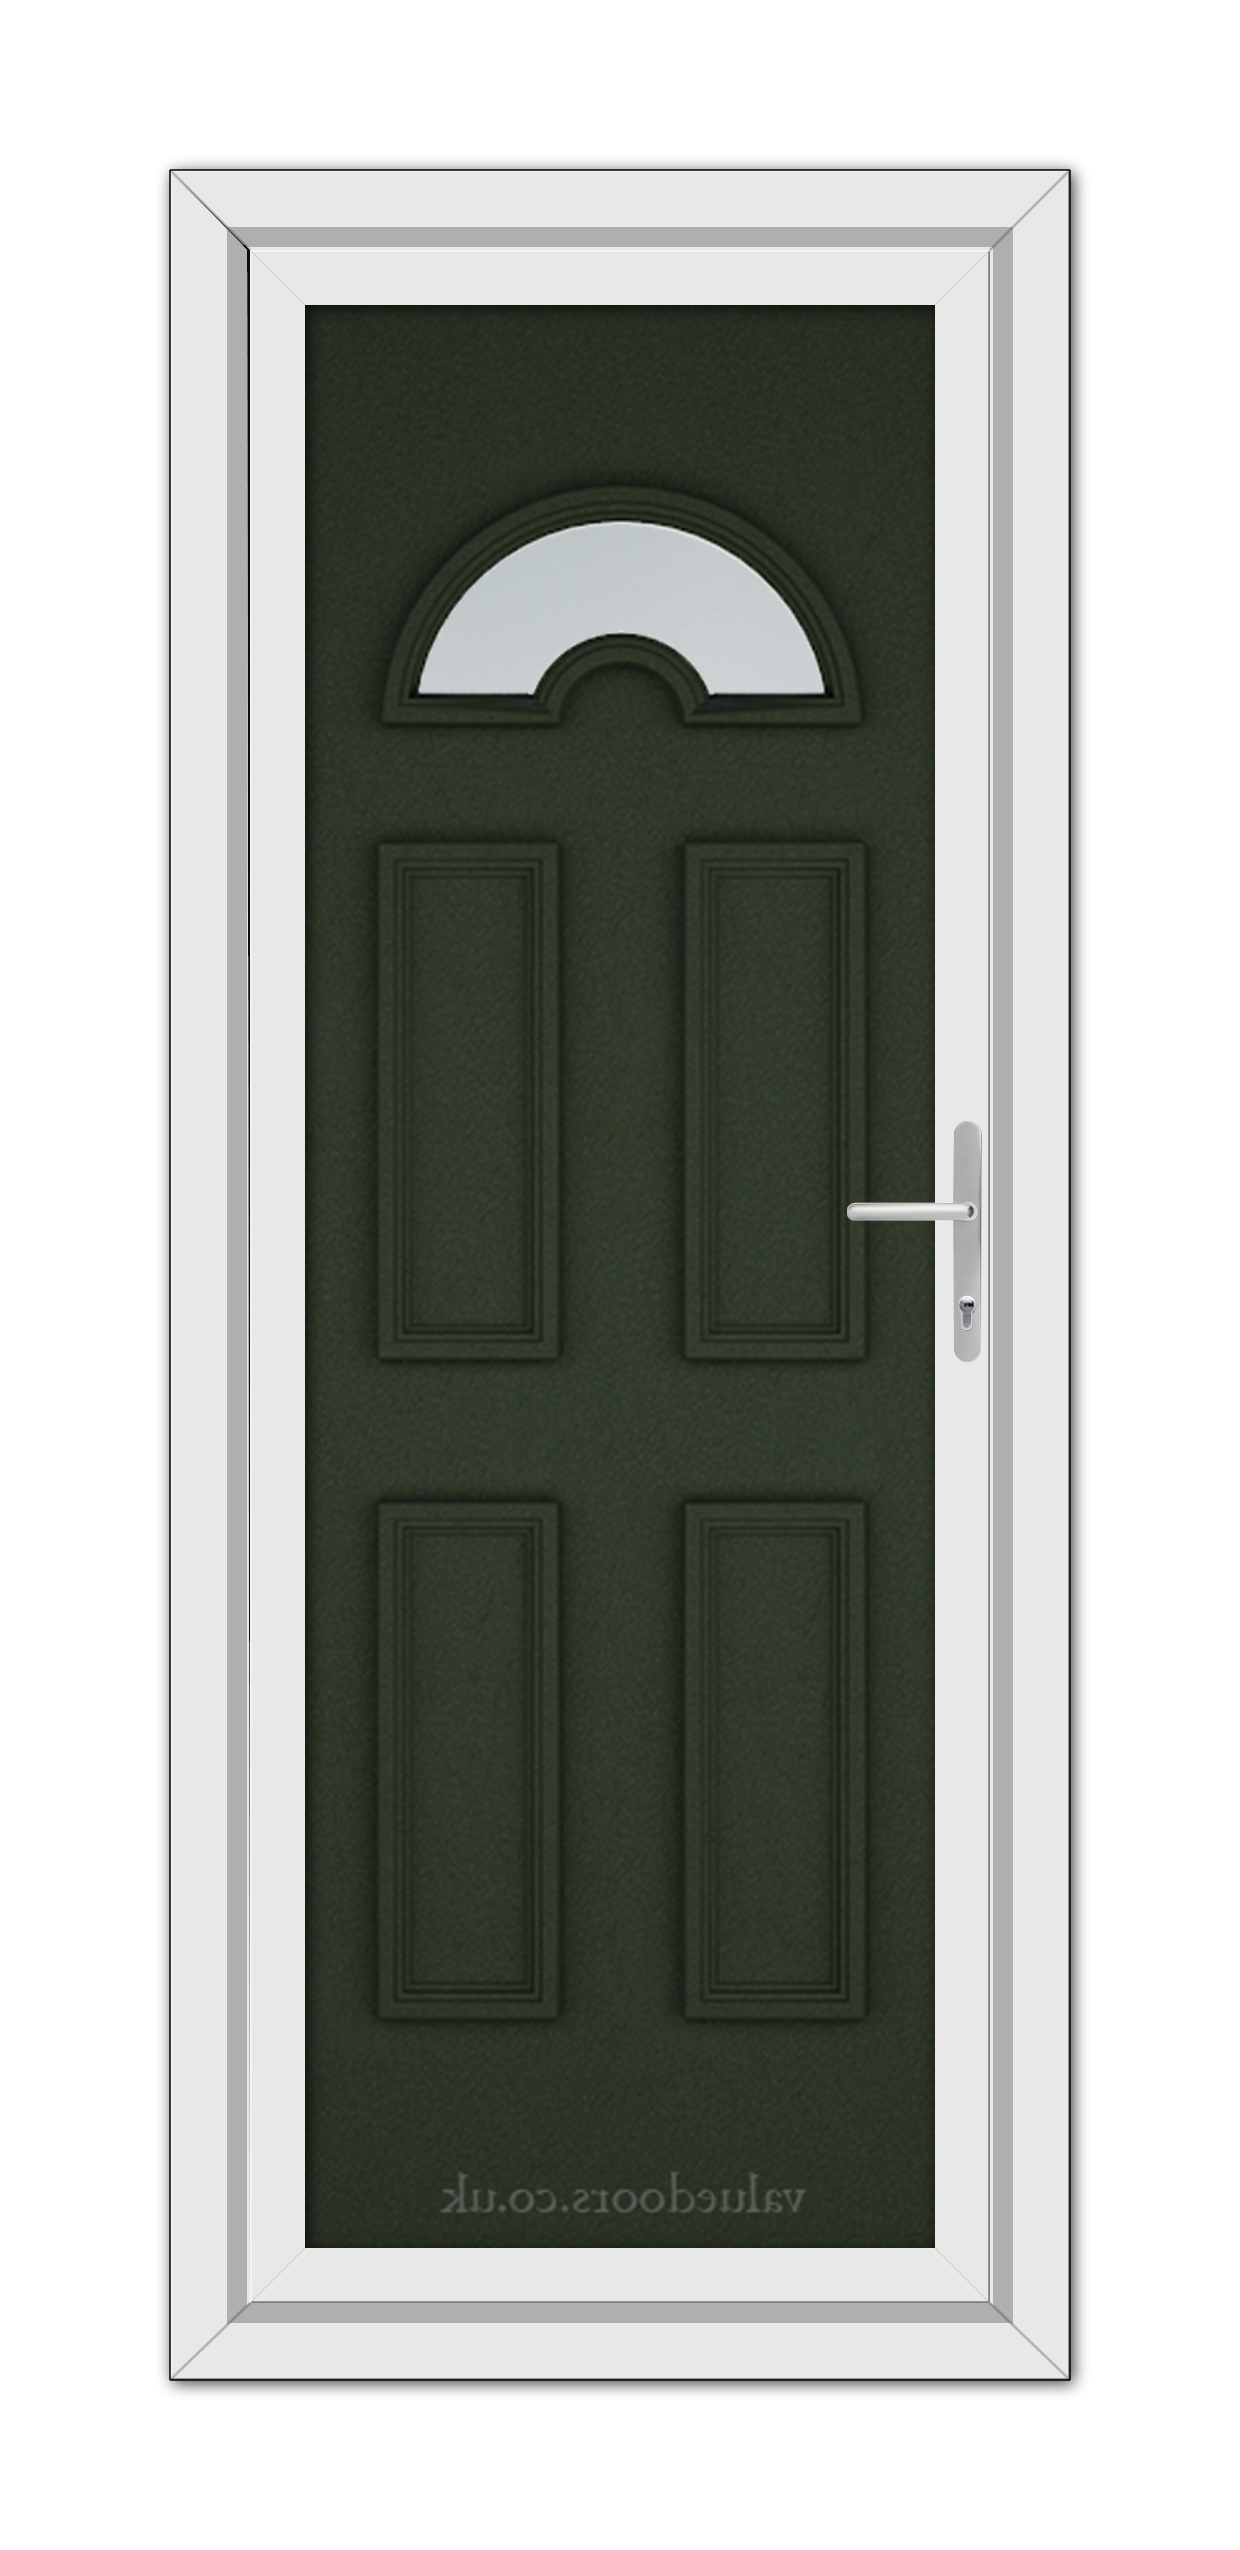 A close-up of a Green Sandringham uPVC Door.